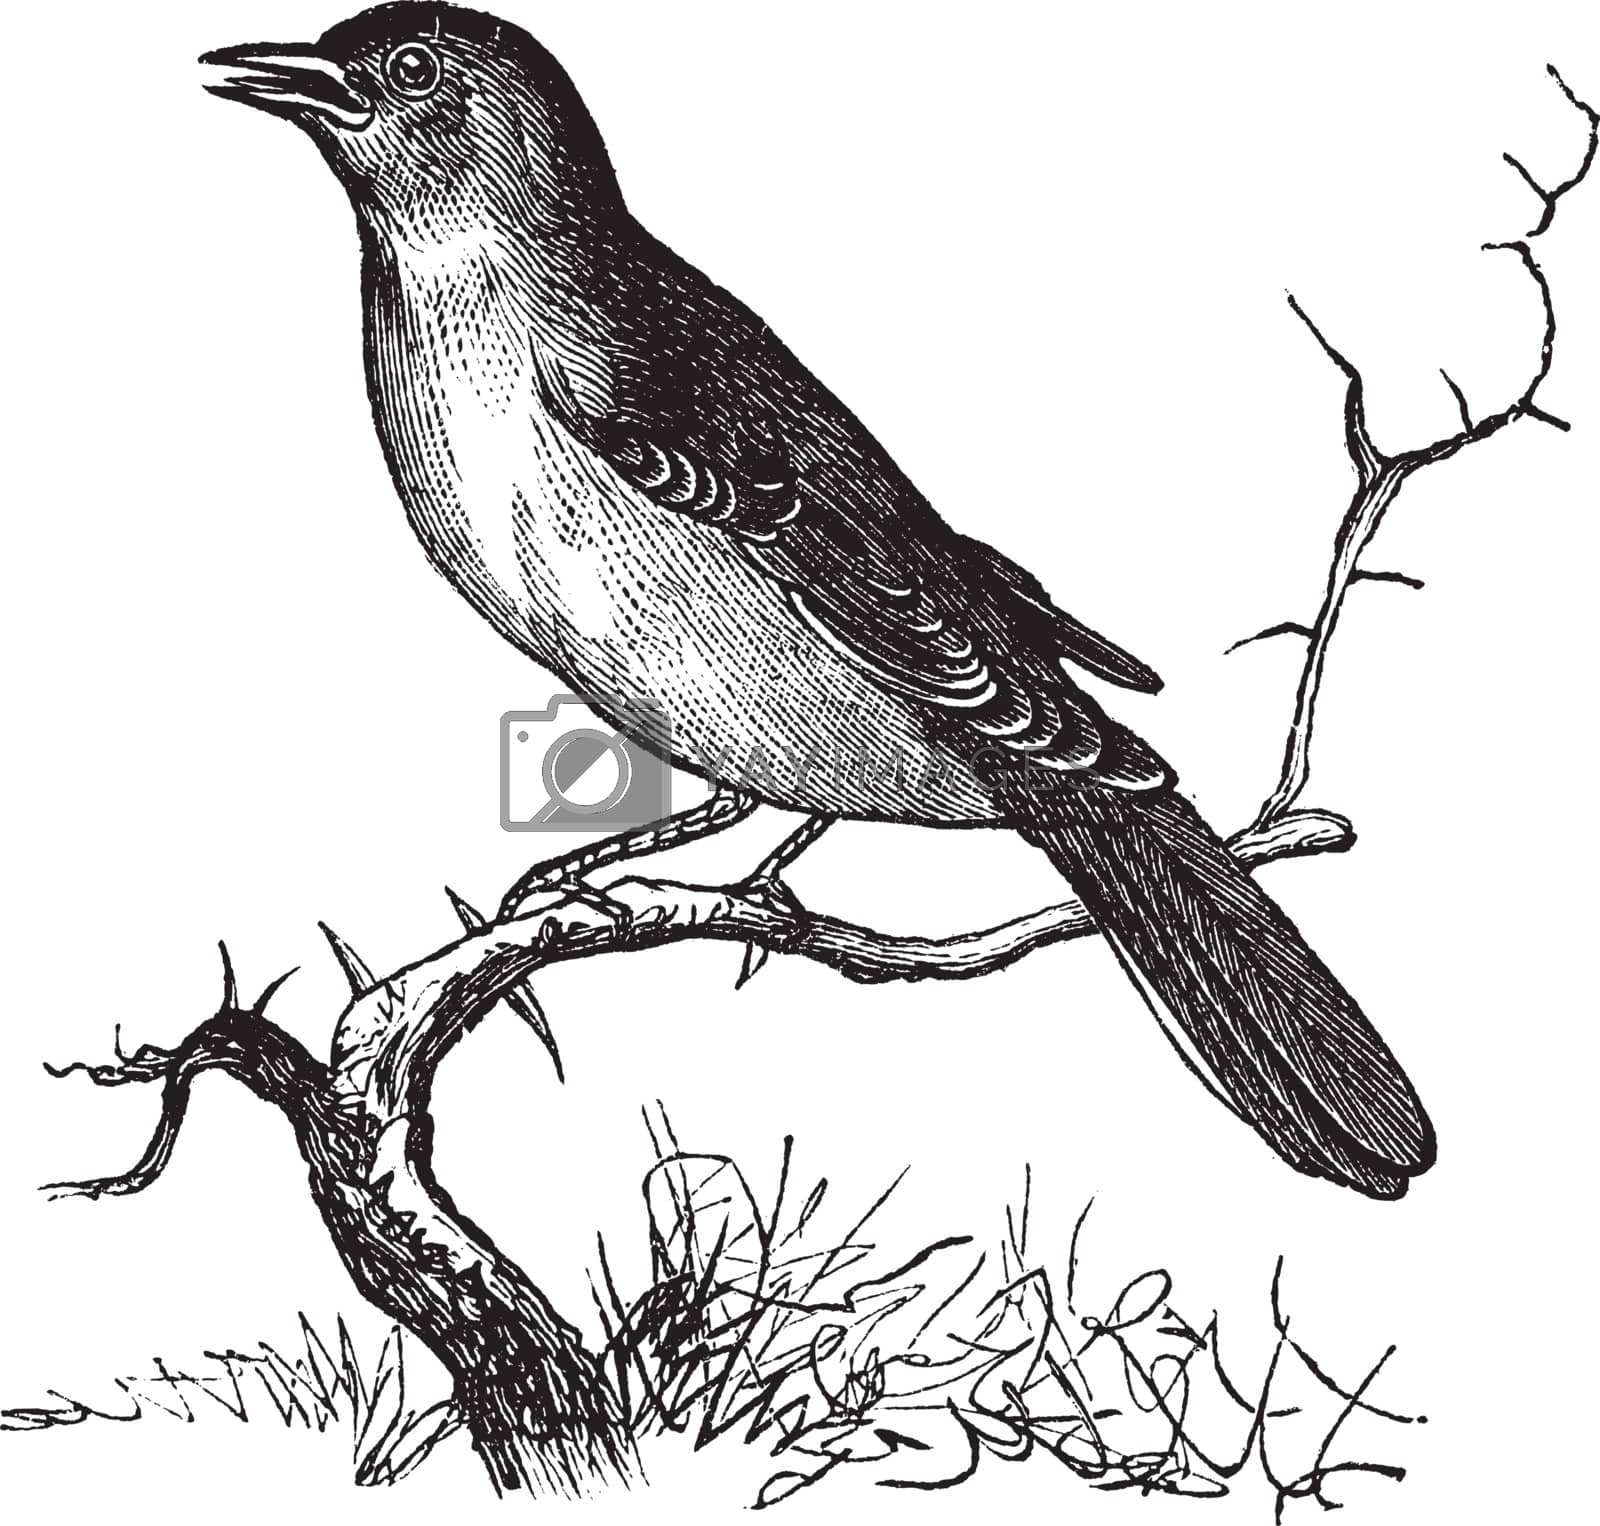 Royalty free image of Nightingale or Luscinia megarhynchos vintage engraving by Morphart